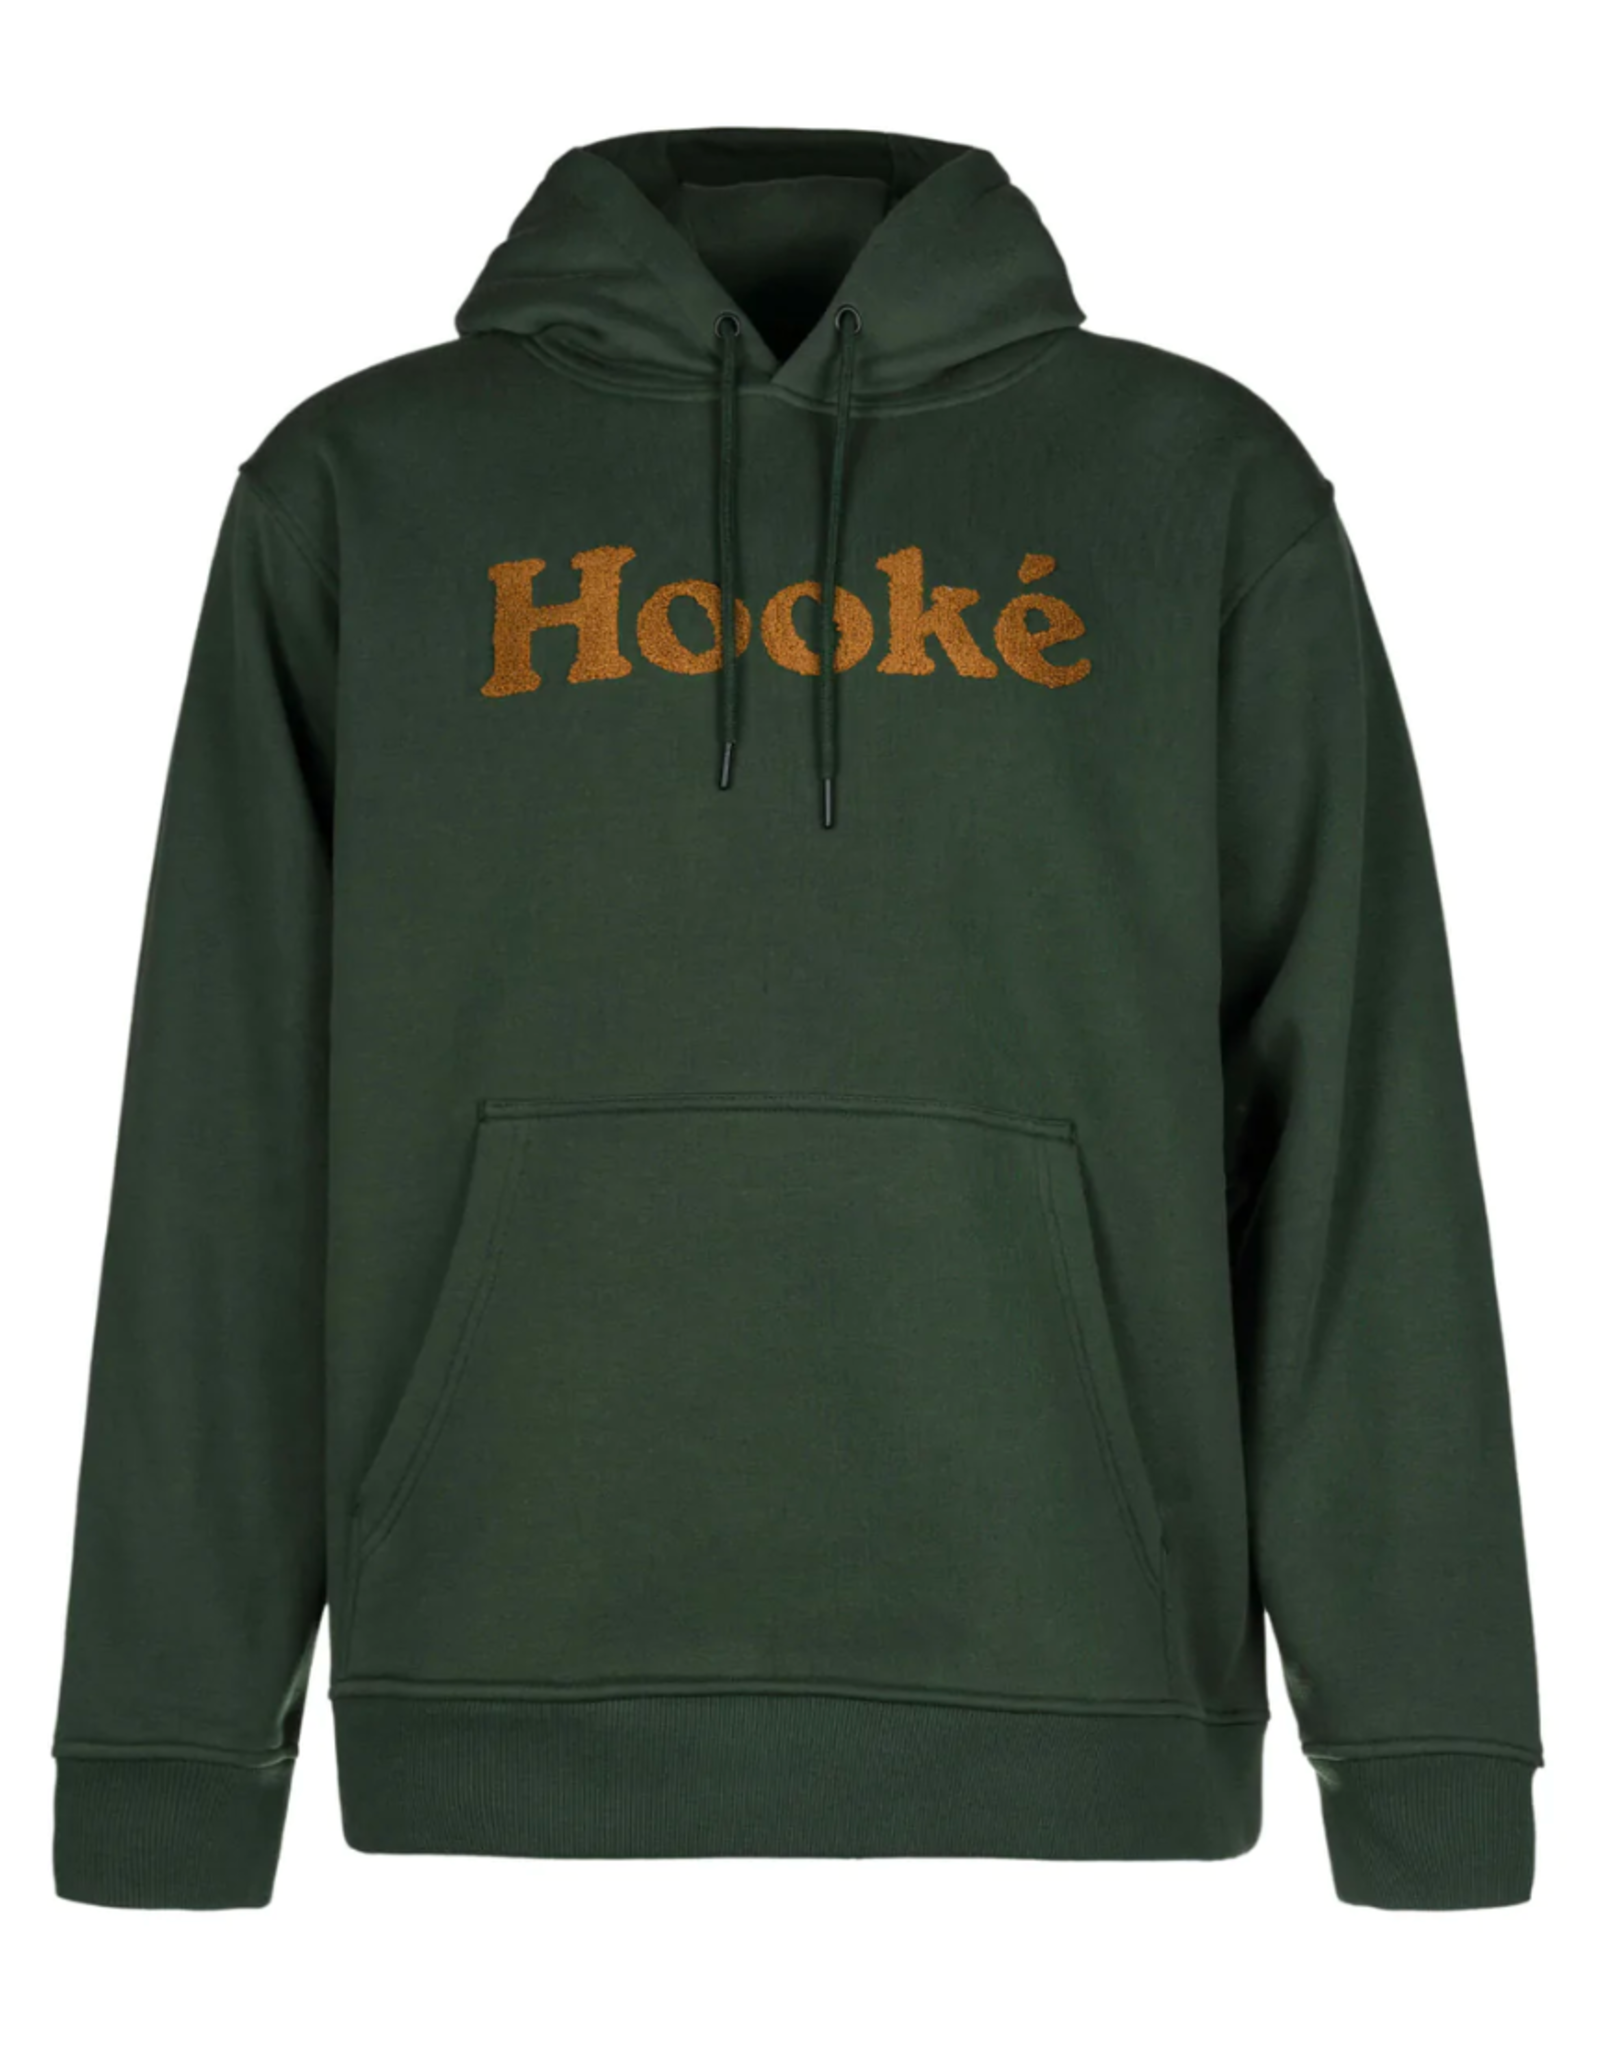 Hooké Hoodie Homme Hooké Signature